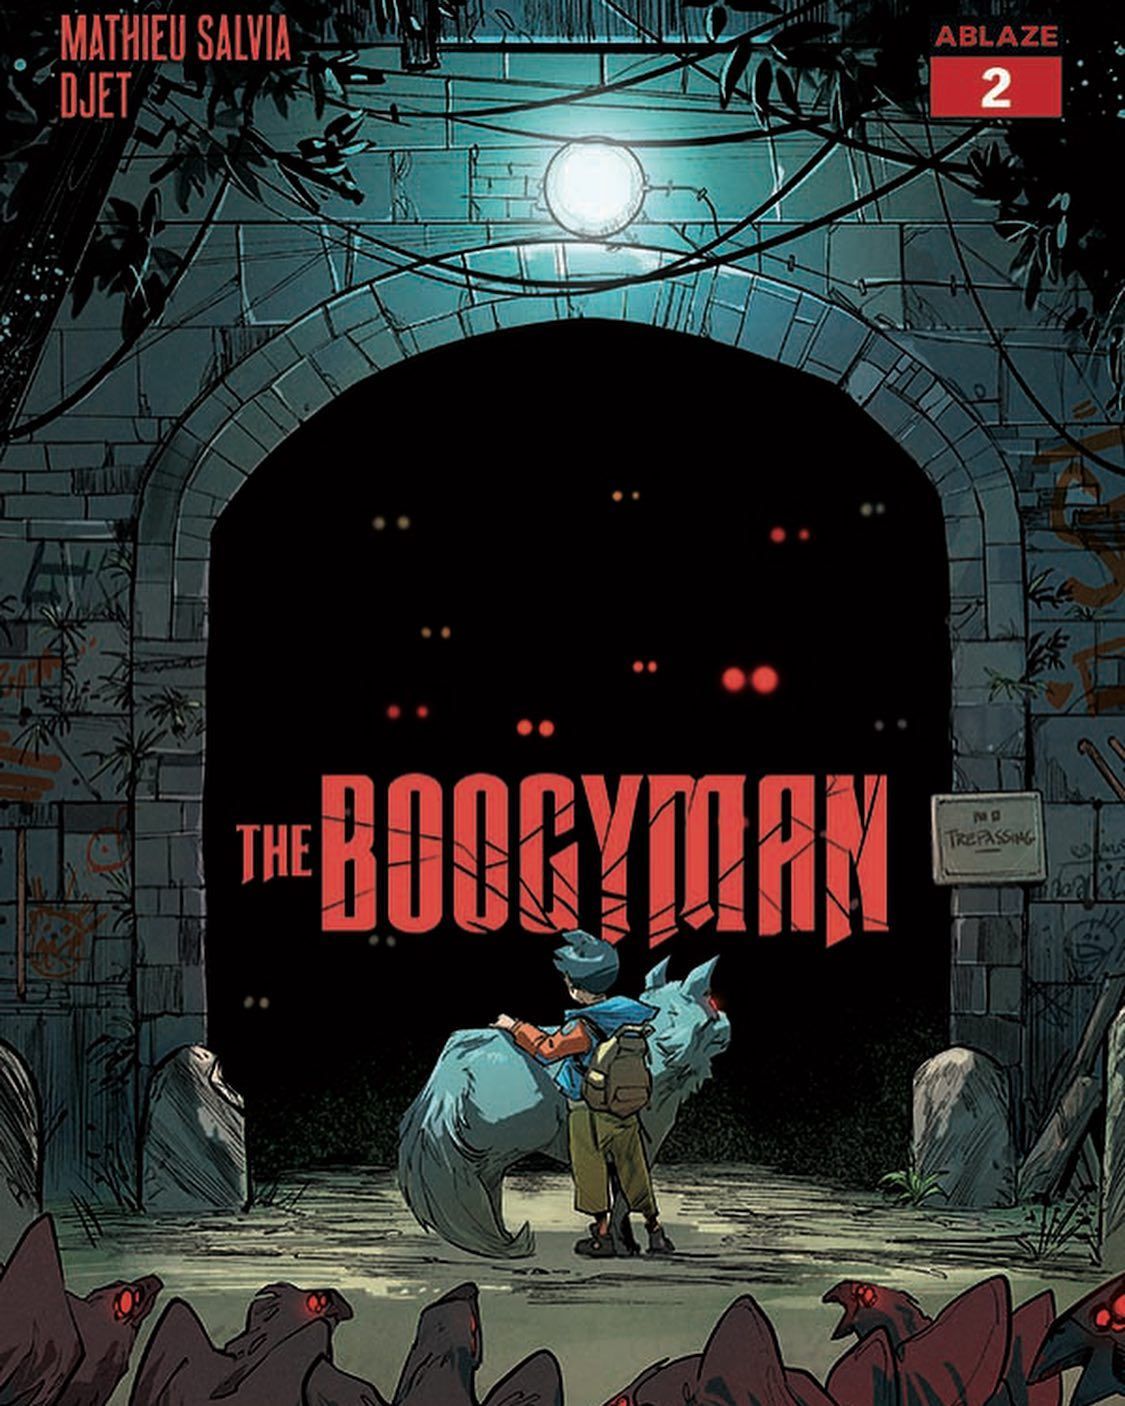 Boogyman #2 Cover A Djet (Mature)